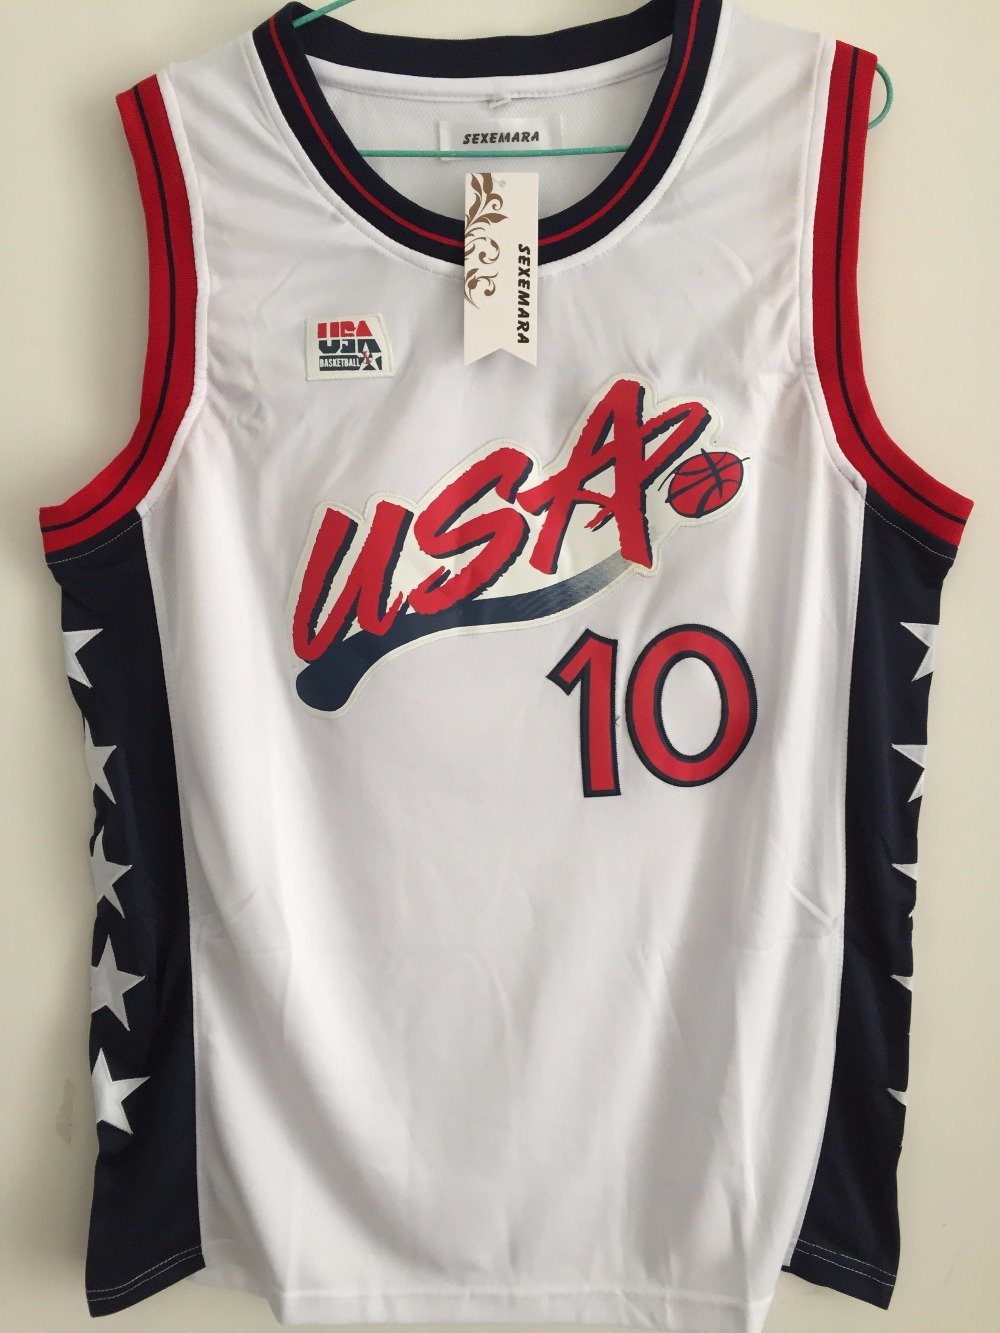 Reggie Miller #10 1996 USA Basketball Jersey Stitched Sewn White